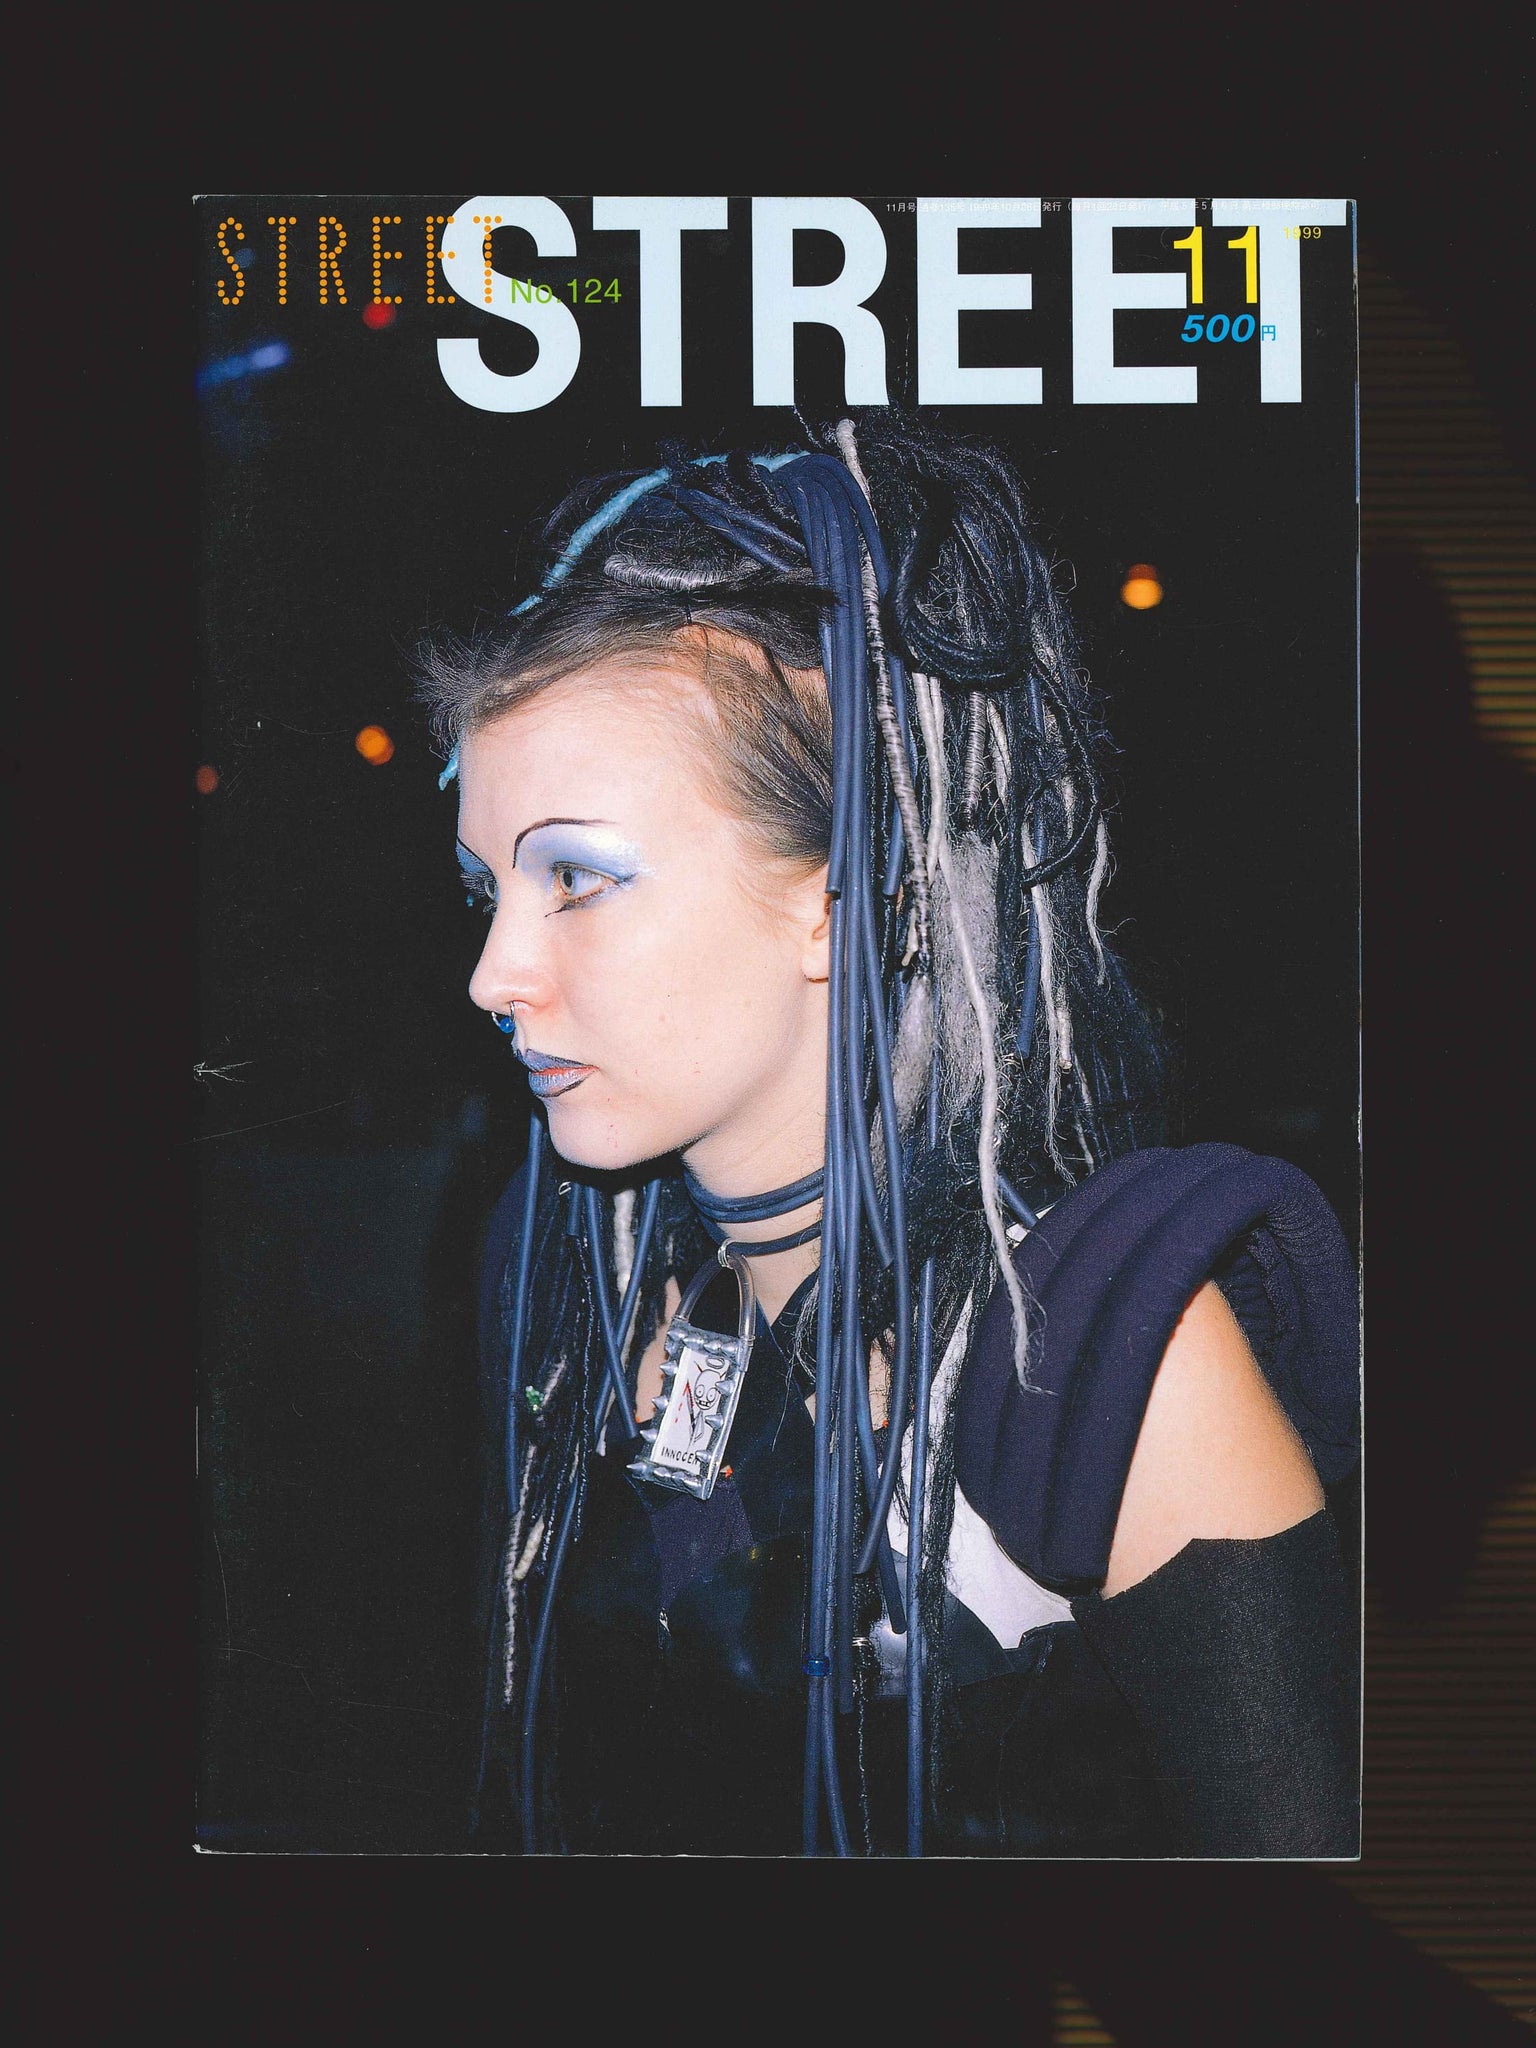 STREET magazine no. 124 / november 1999 / london and paris / Shoichi Aoki